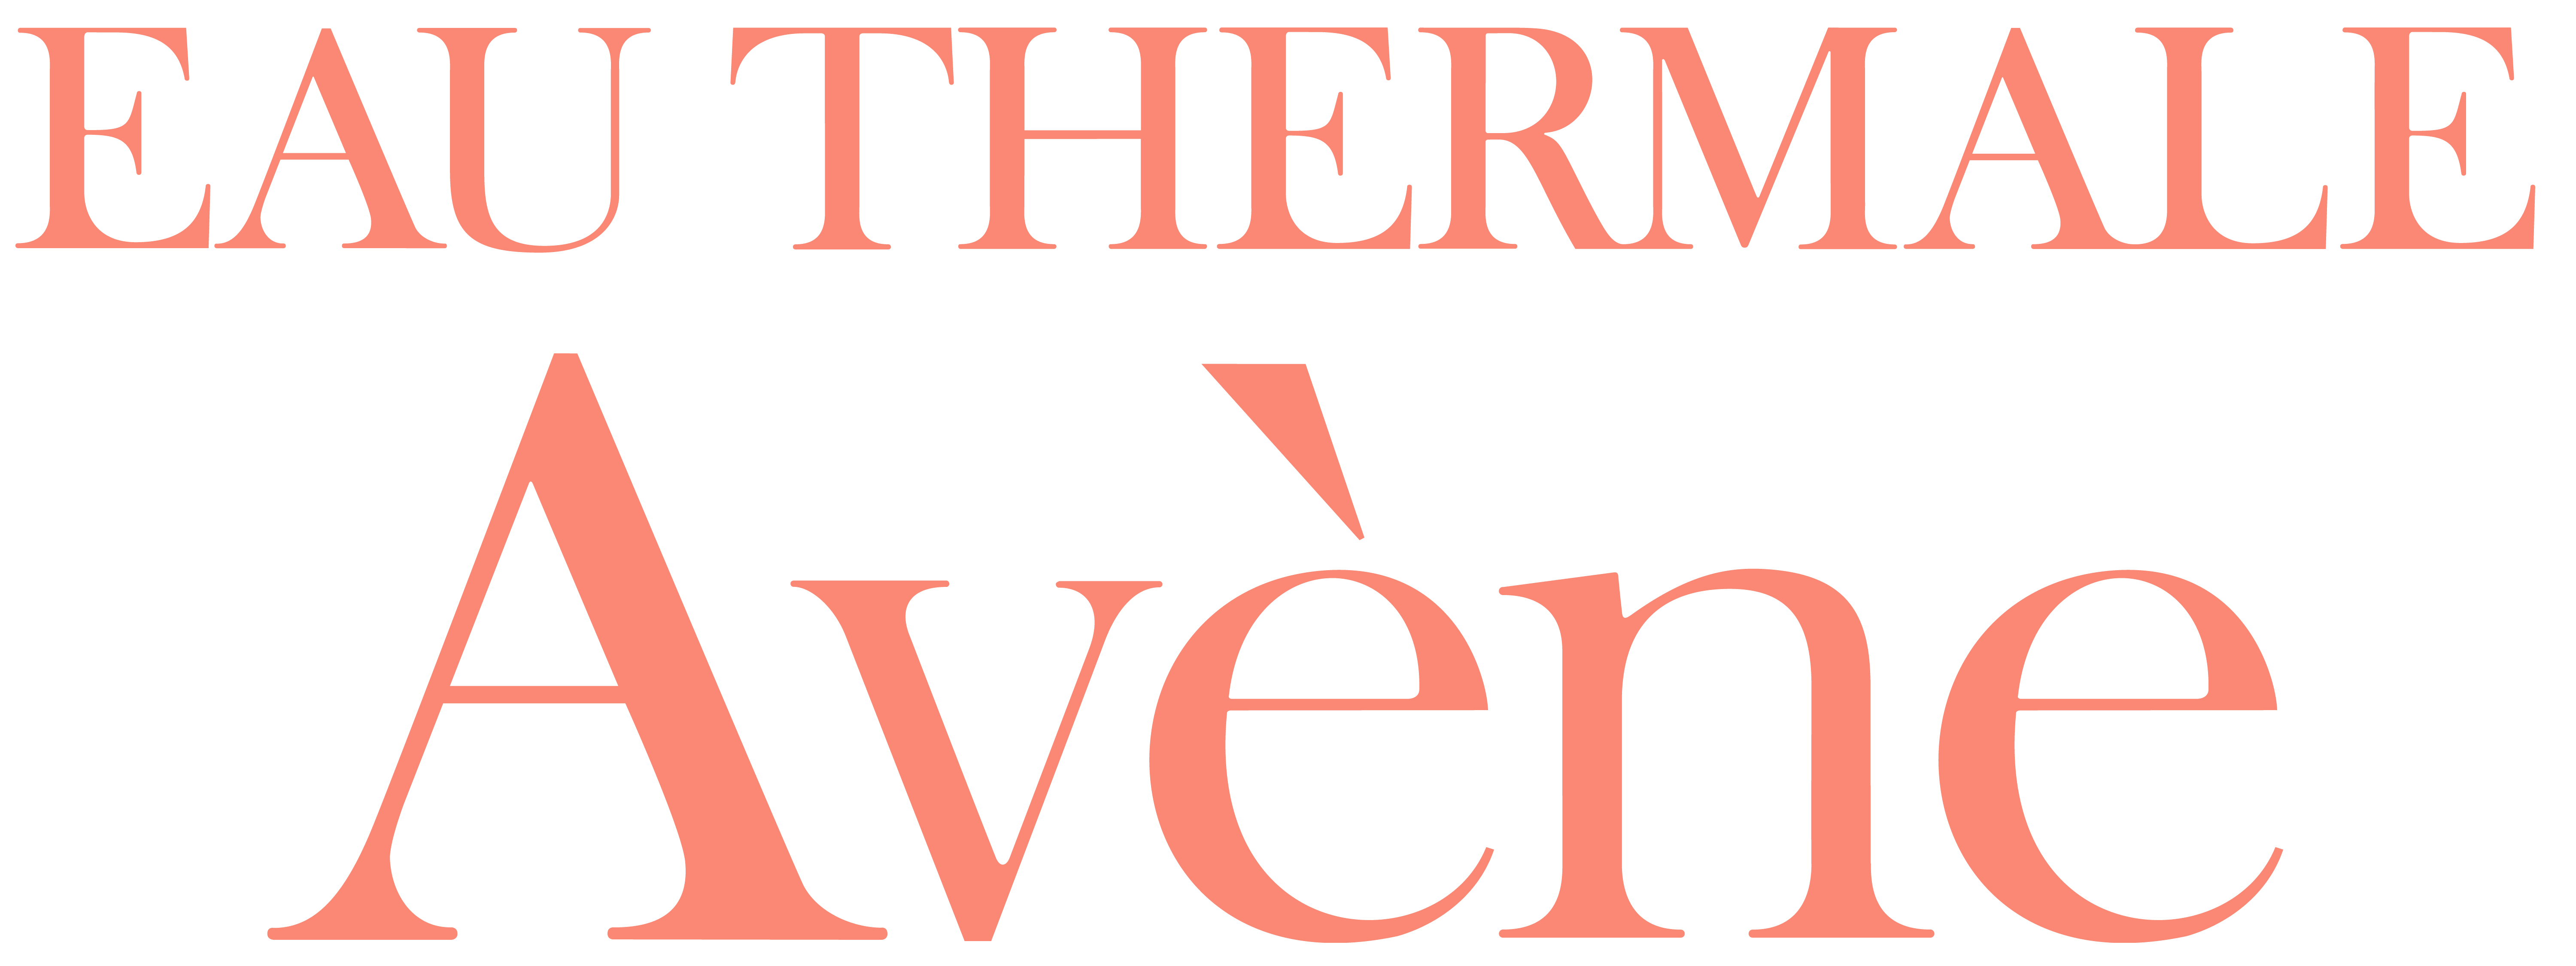 Eay Thermale Avene -logo